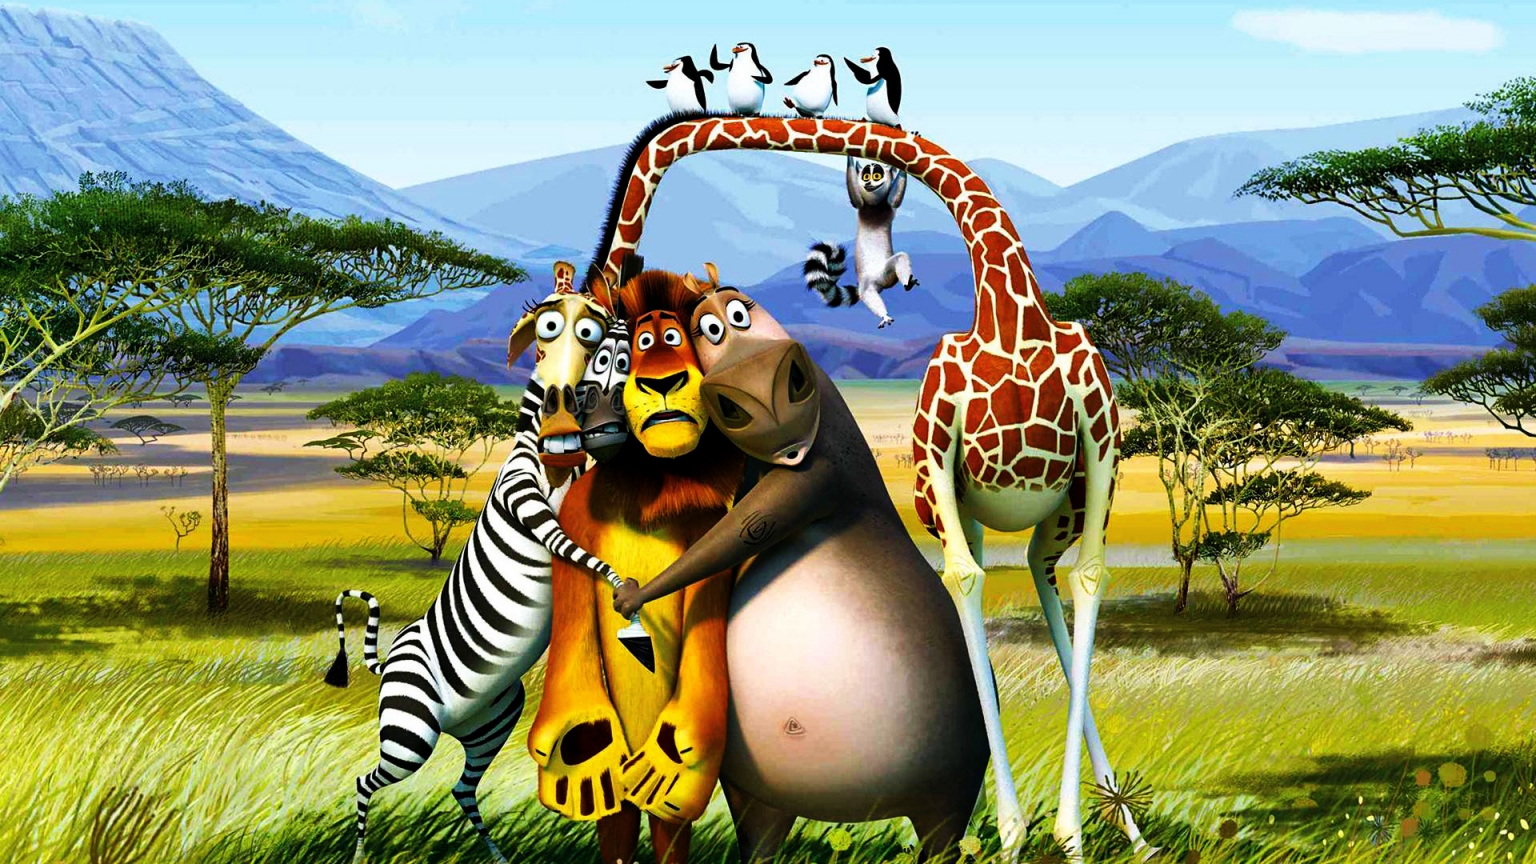 Madagascar 3 Poster for 1536 x 864 HDTV resolution